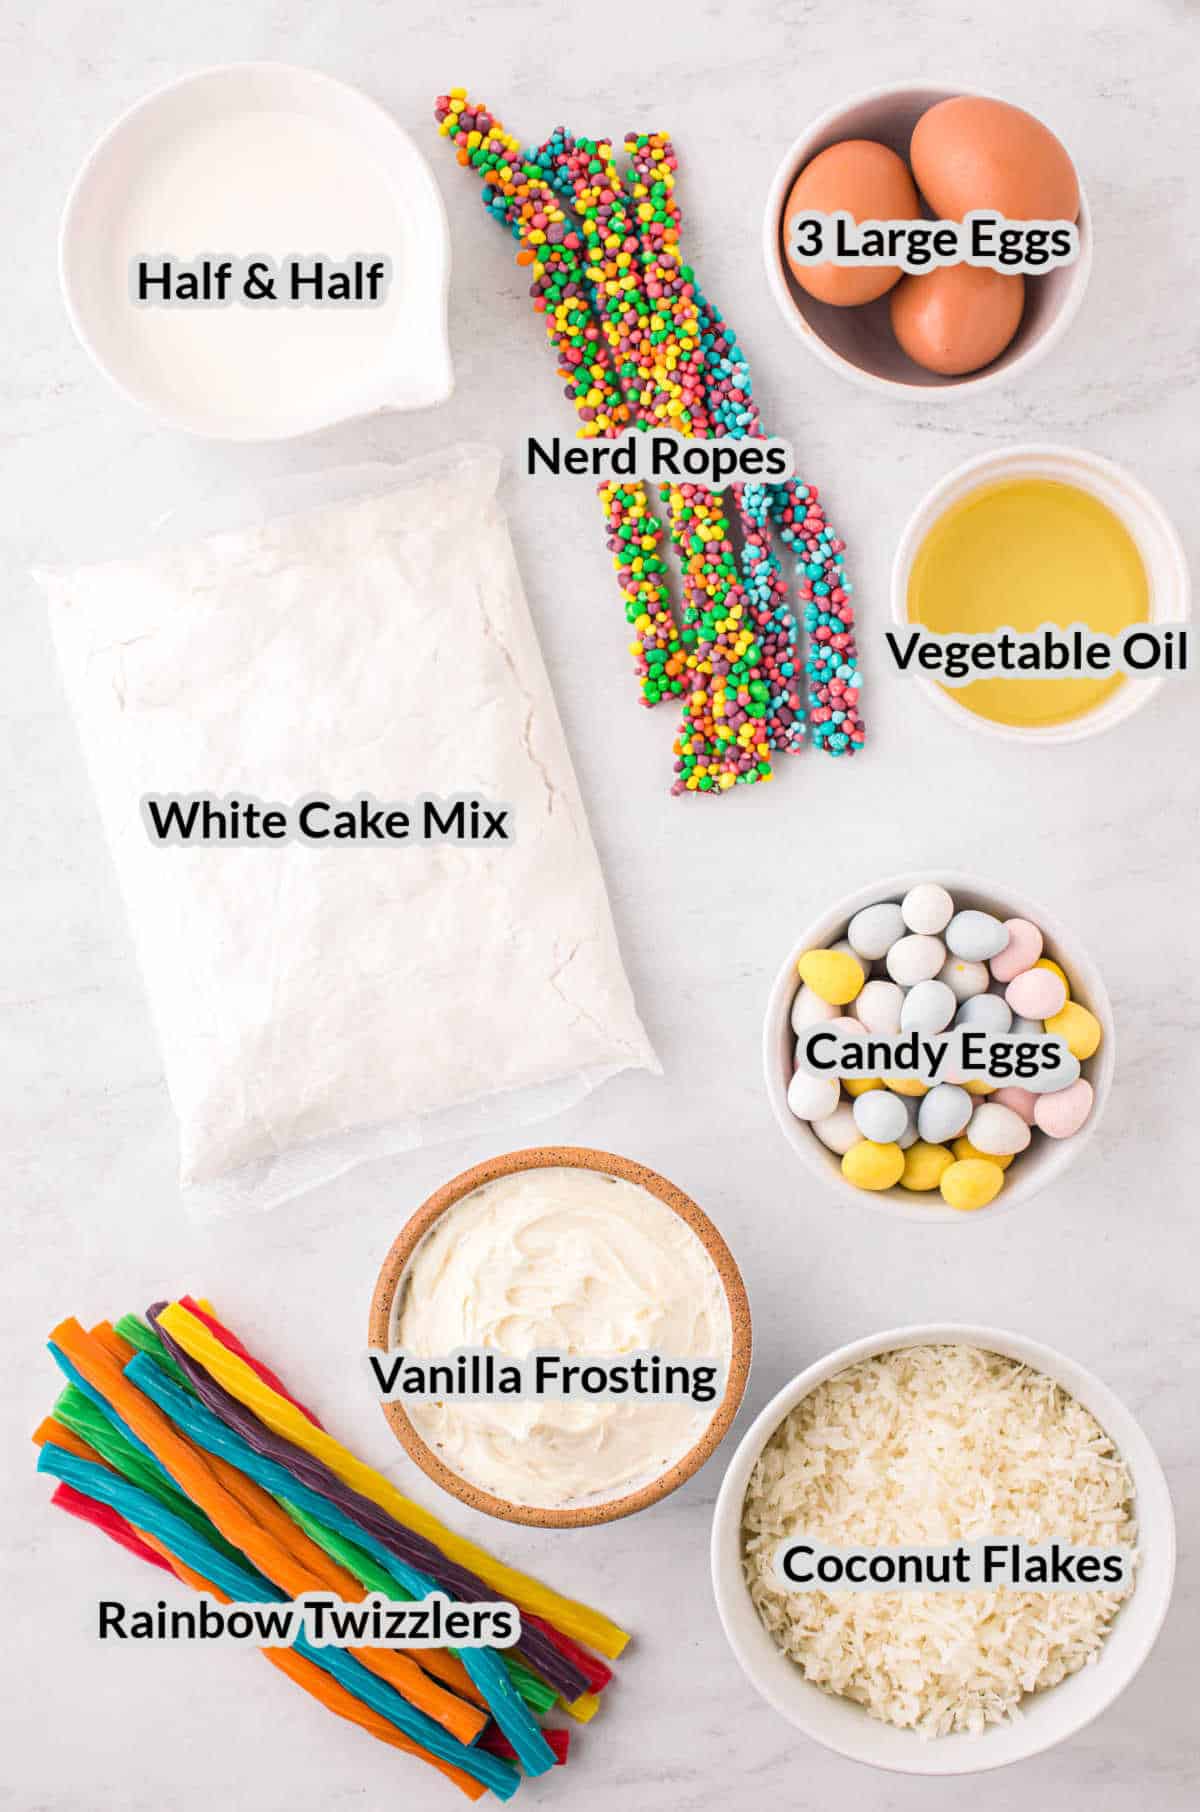 Overhead Image of the Easter Basket Cupcake Ingredients